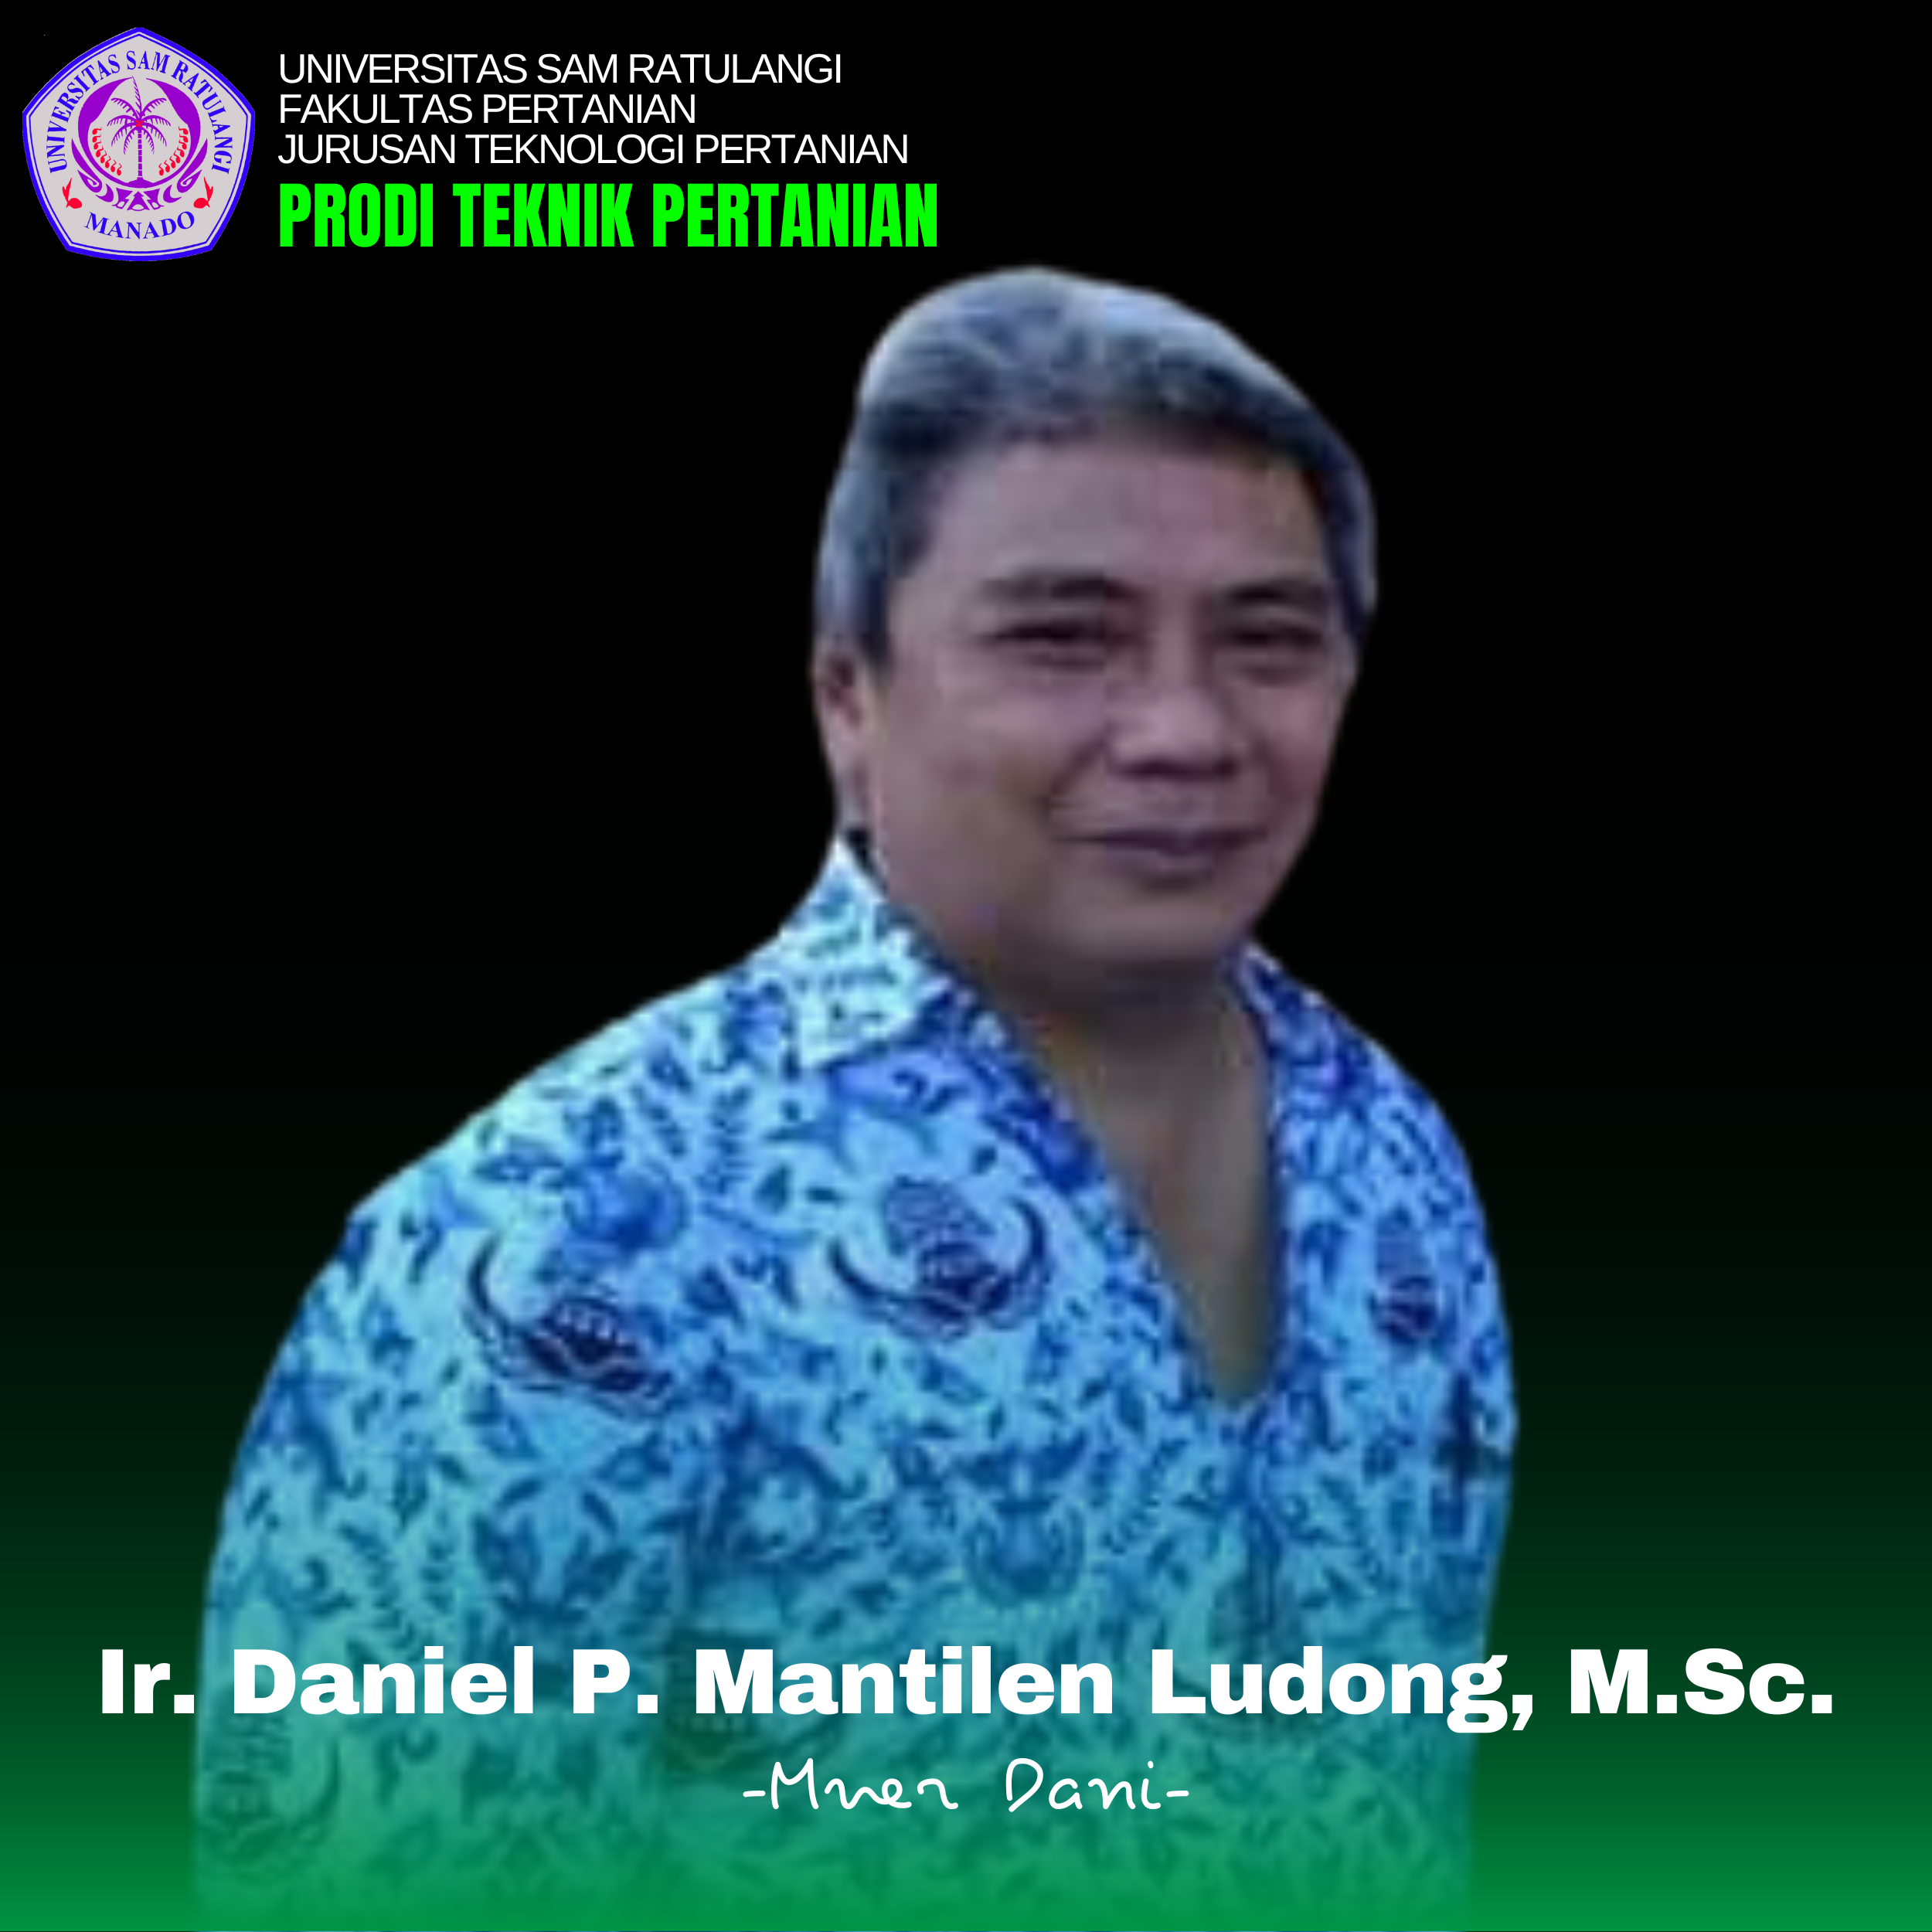 Ir. Daniel P. M. Ludong, M.Sc.